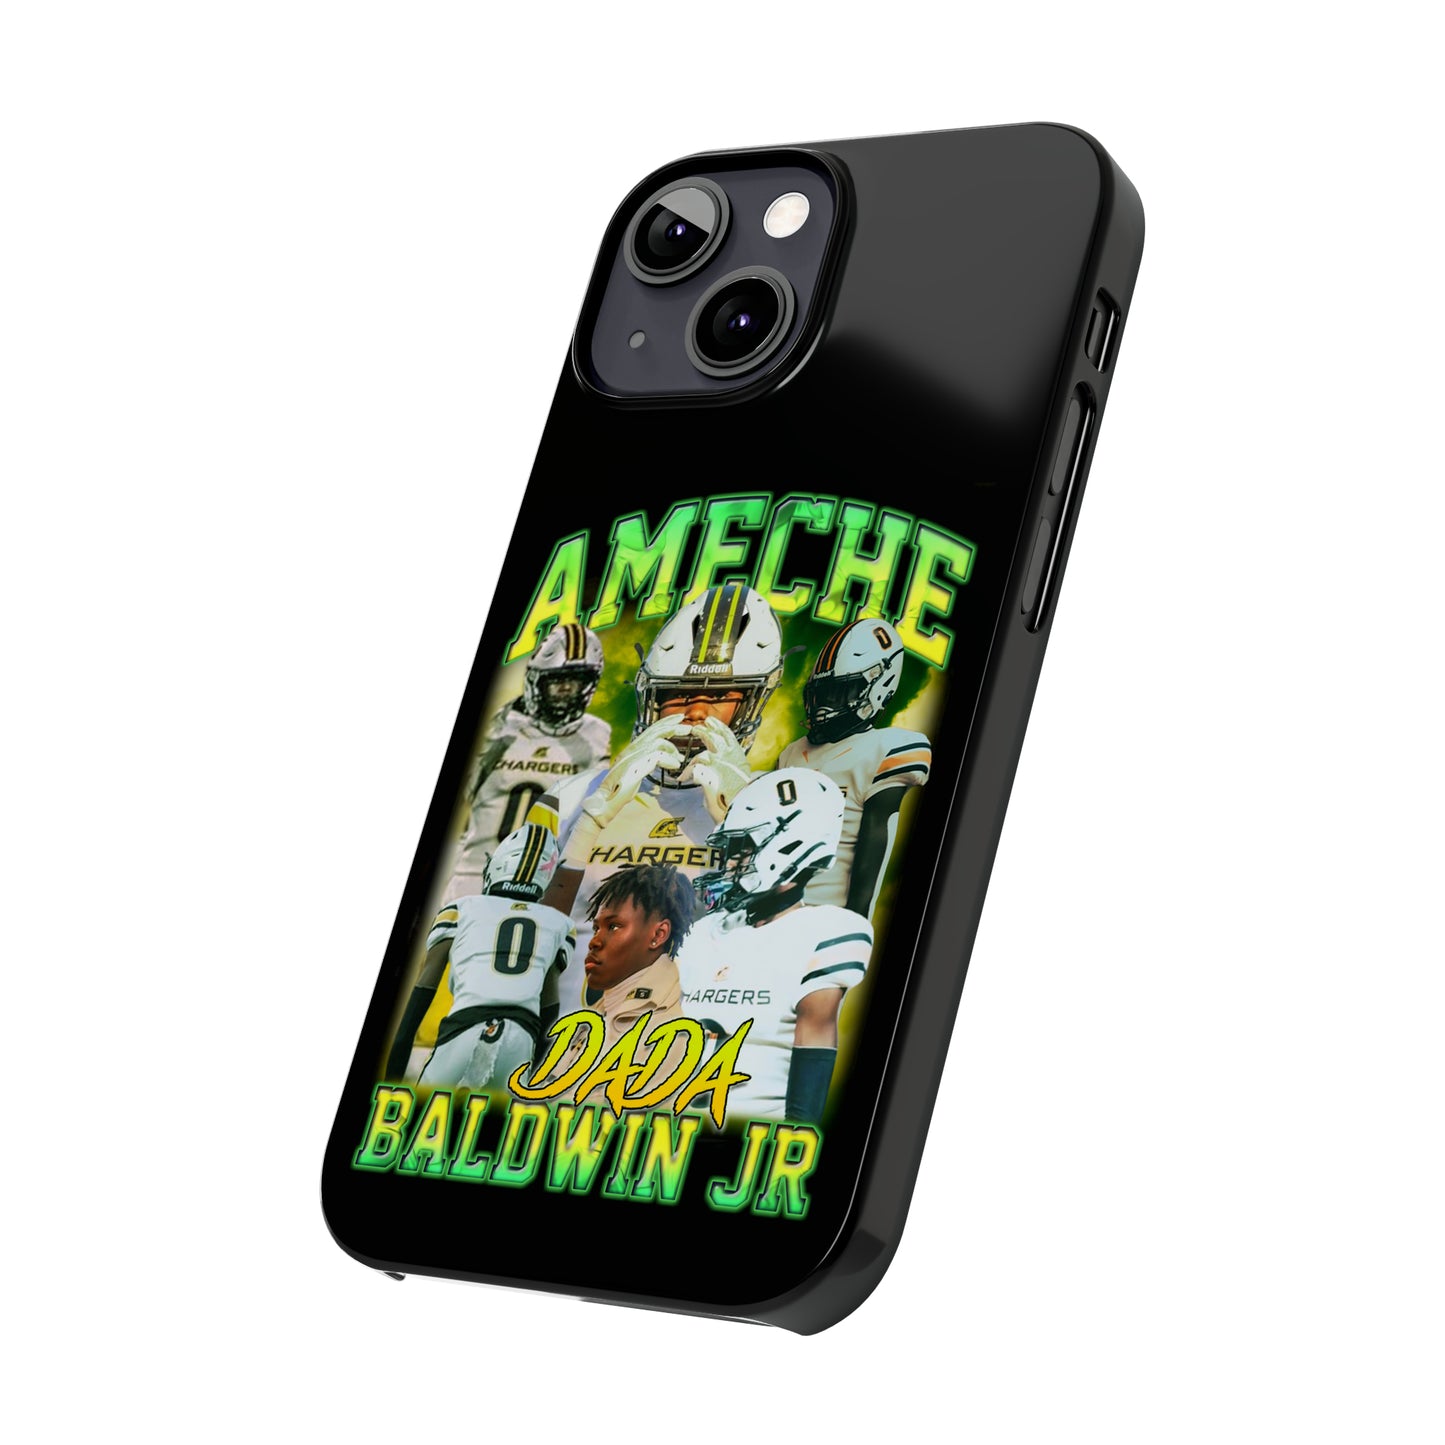 Ameche Baldwin Jr Phone Case